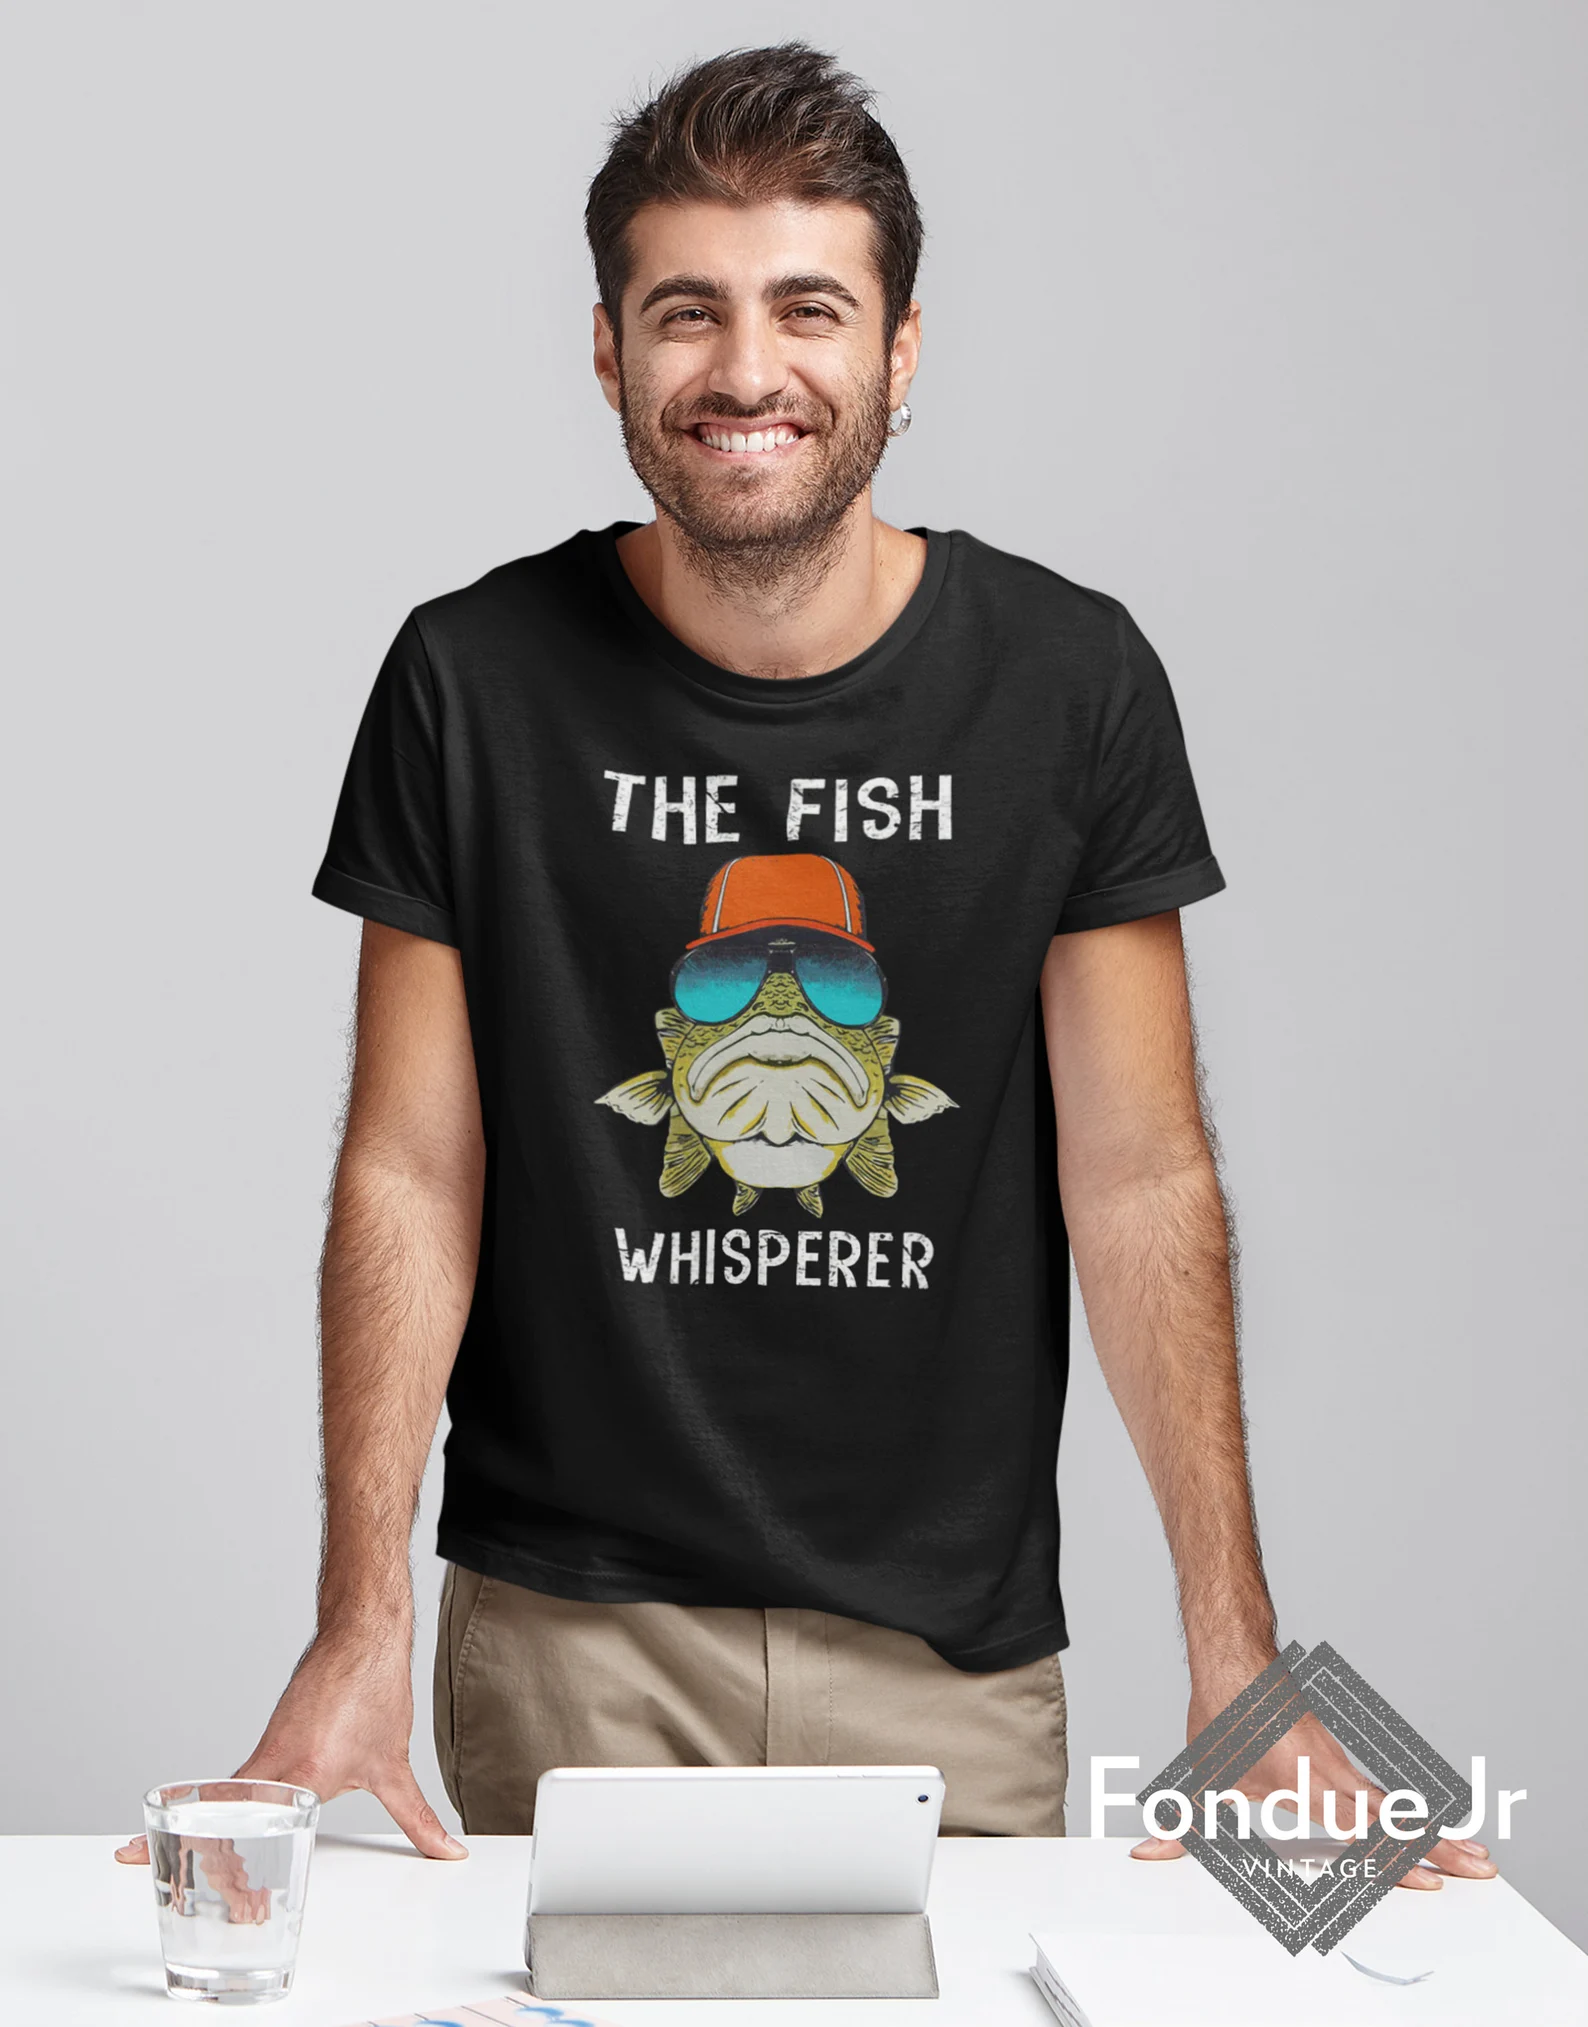 Black men's t-shirt with fish boss.